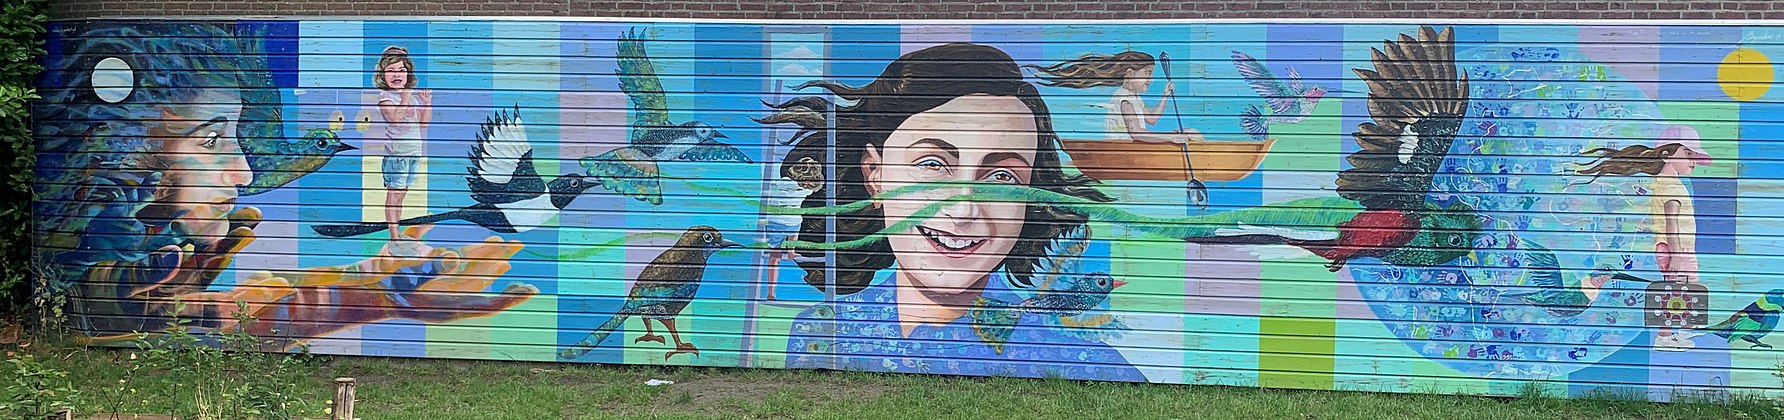 Byron Gómez Chavarría, Mural of Anne Frank with birds and hand prints of children (2017), Anne Frankschool, Utrecht, the Netherlands, 2020